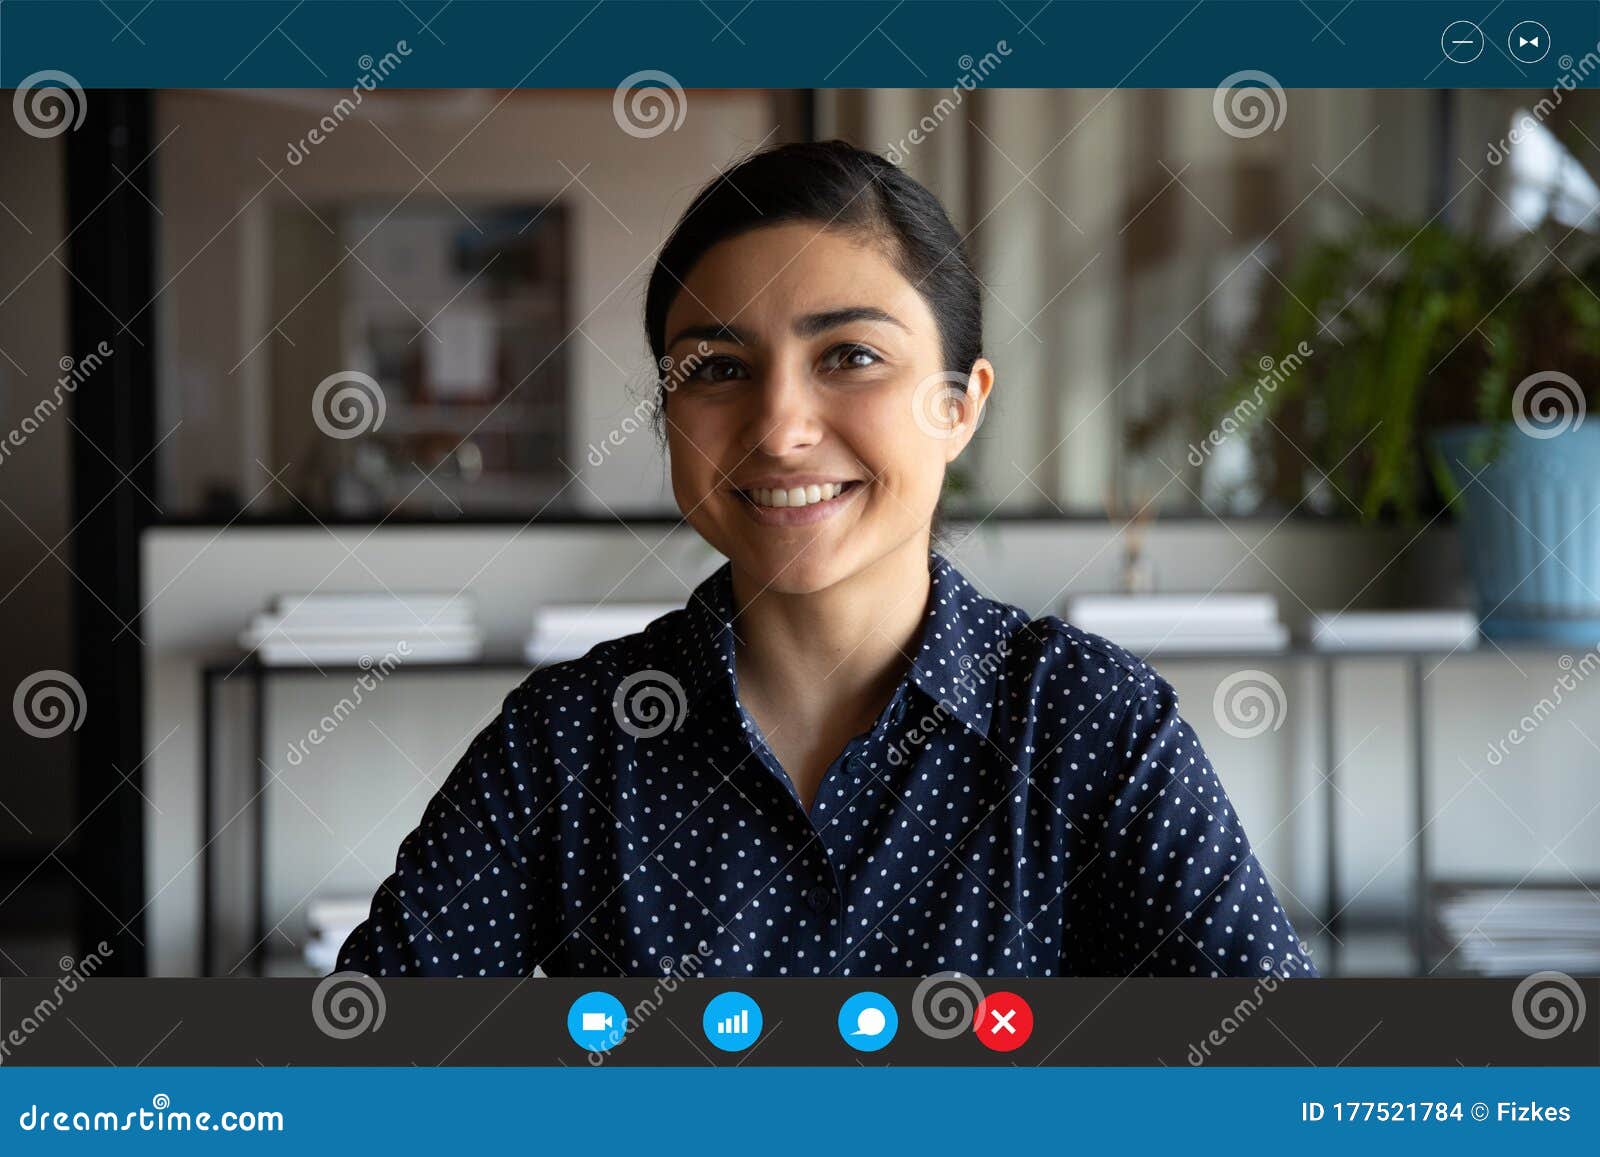 Headshot of Smiling Indian Woman Speak on Video Call Stock Photo photo